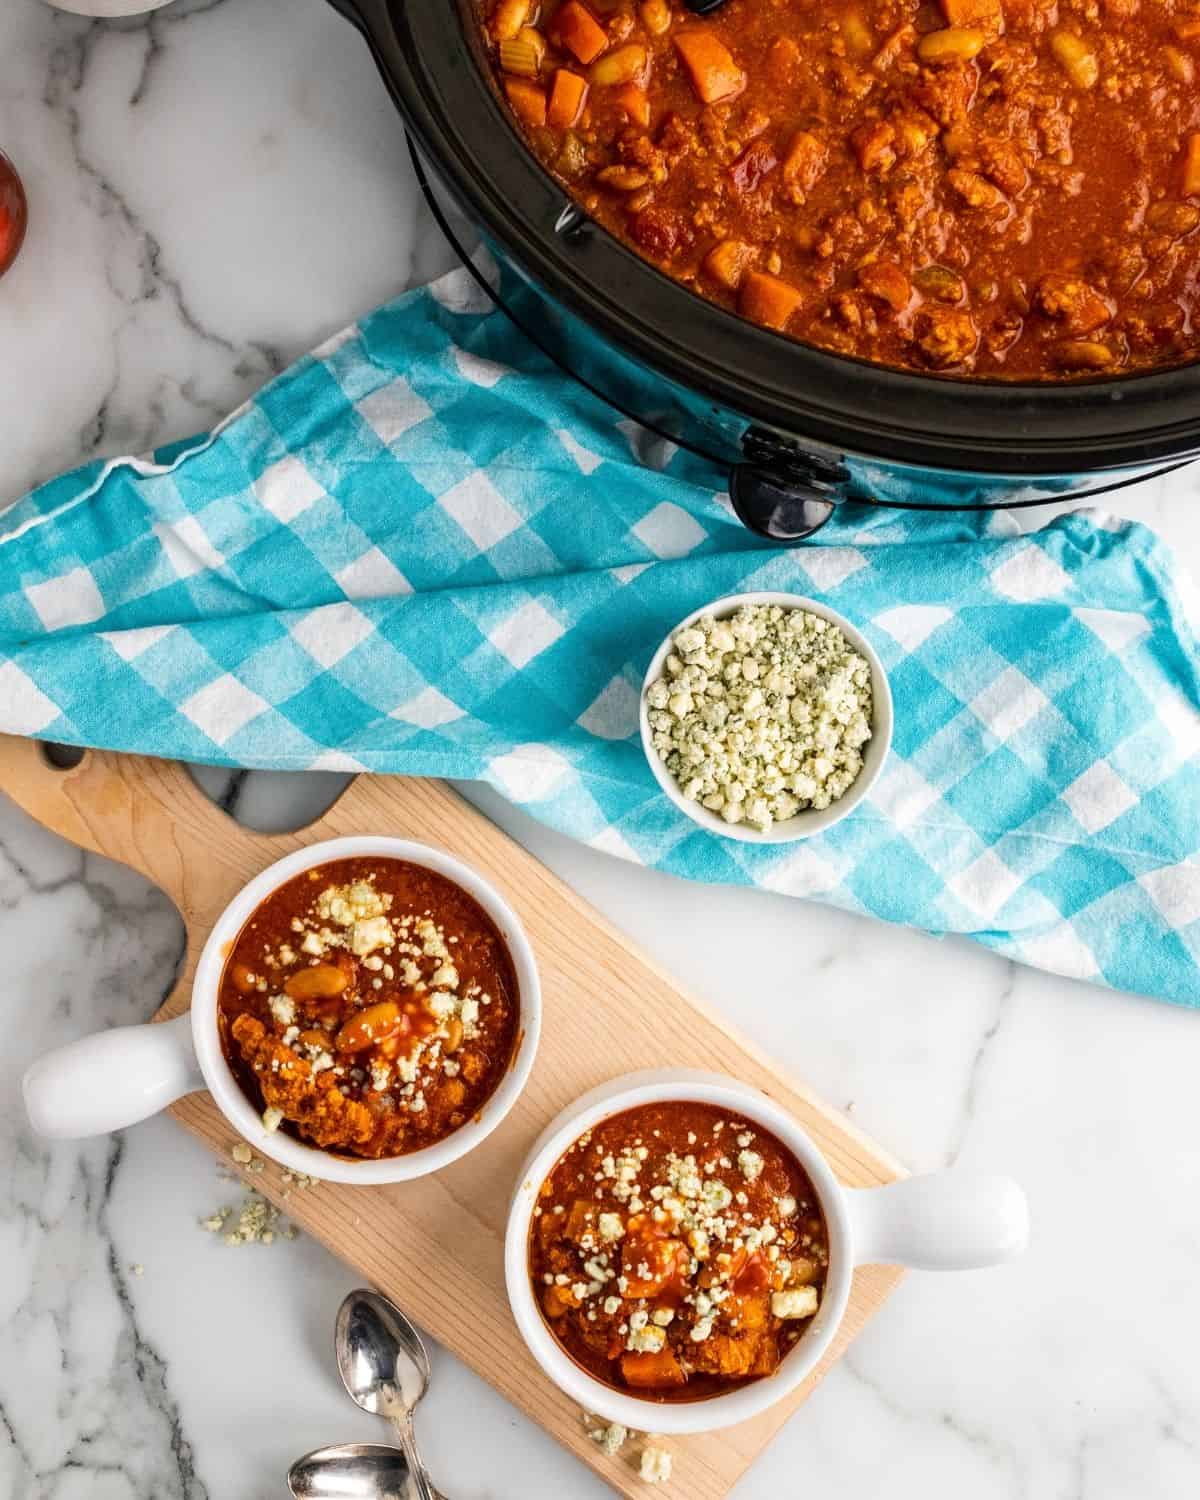 Two bowls of buffalo chicken chili next to a saucepan